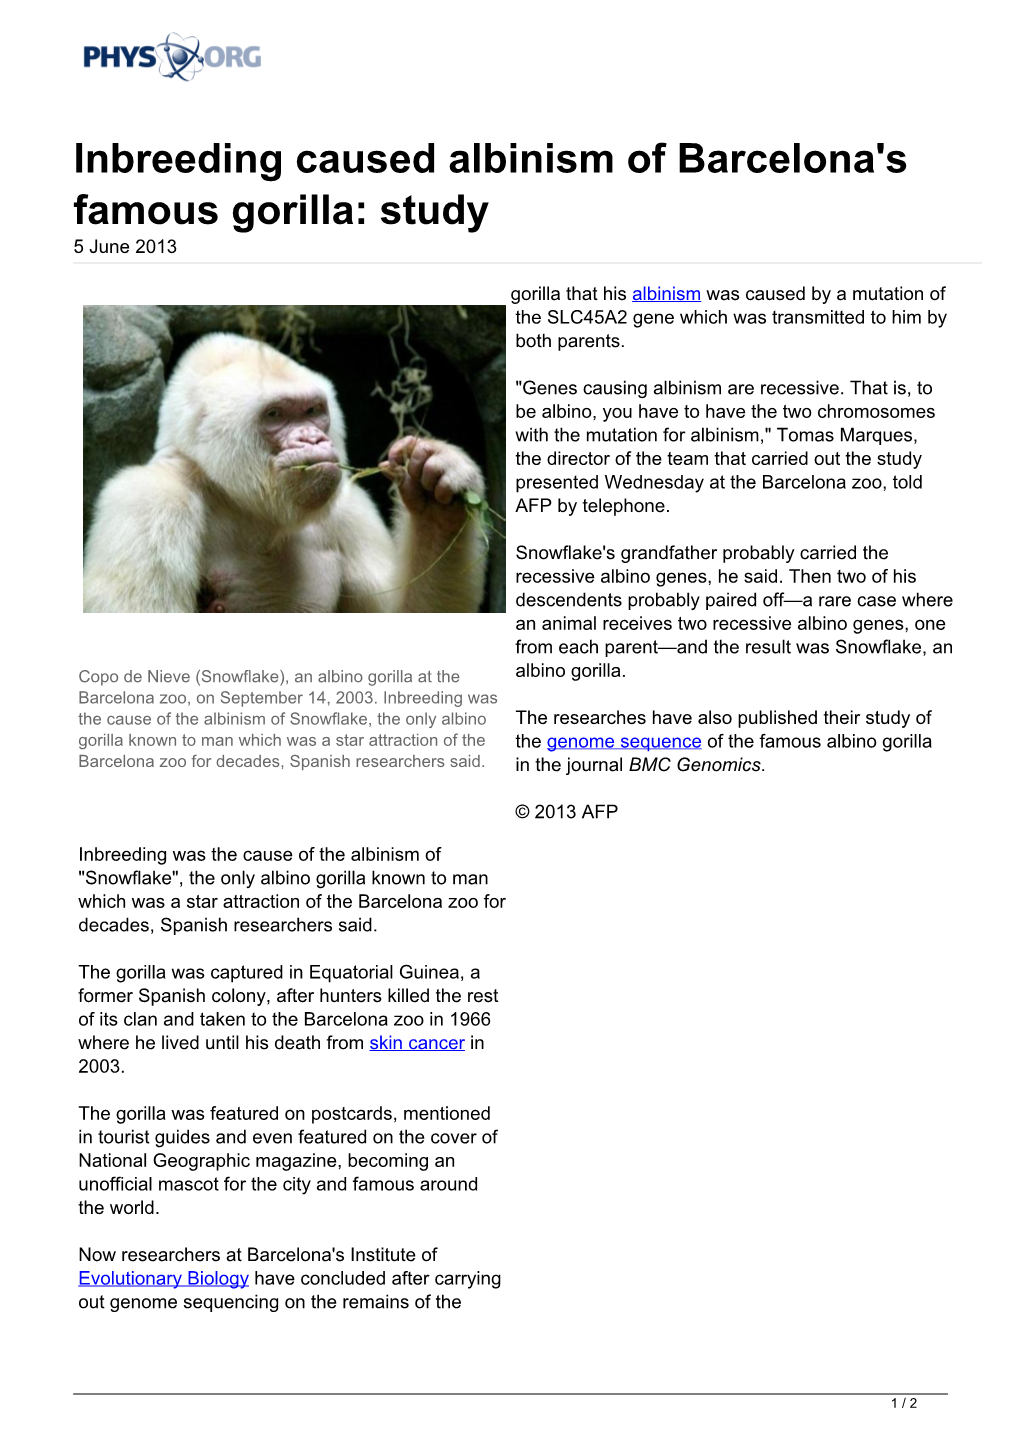 Inbreeding Caused Albinism of Barcelona's Famous Gorilla: Study 5 June 2013